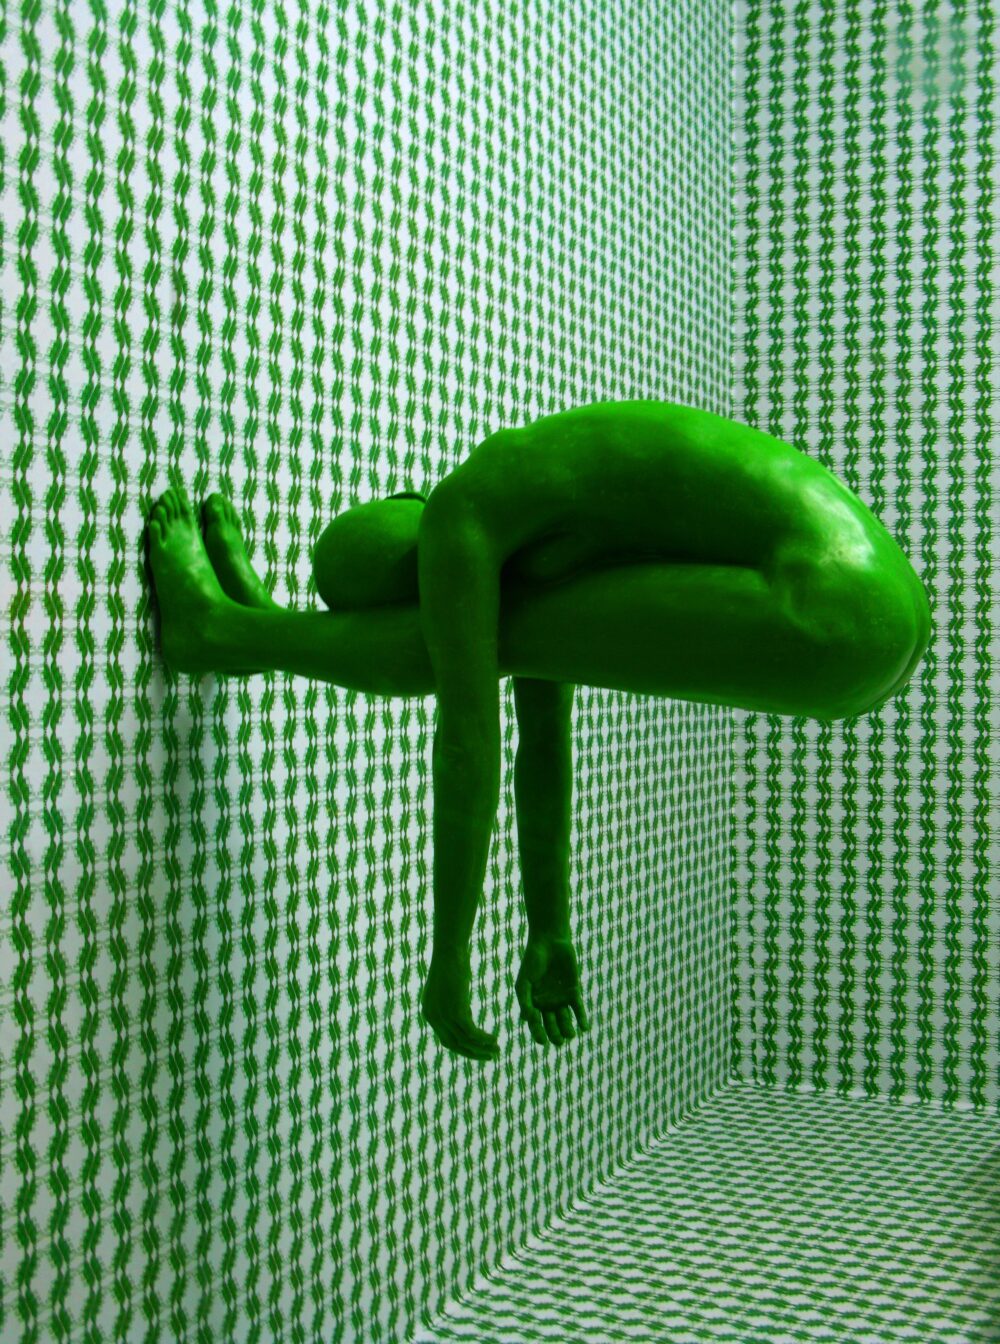 Topsy Turvy green man defying gravity